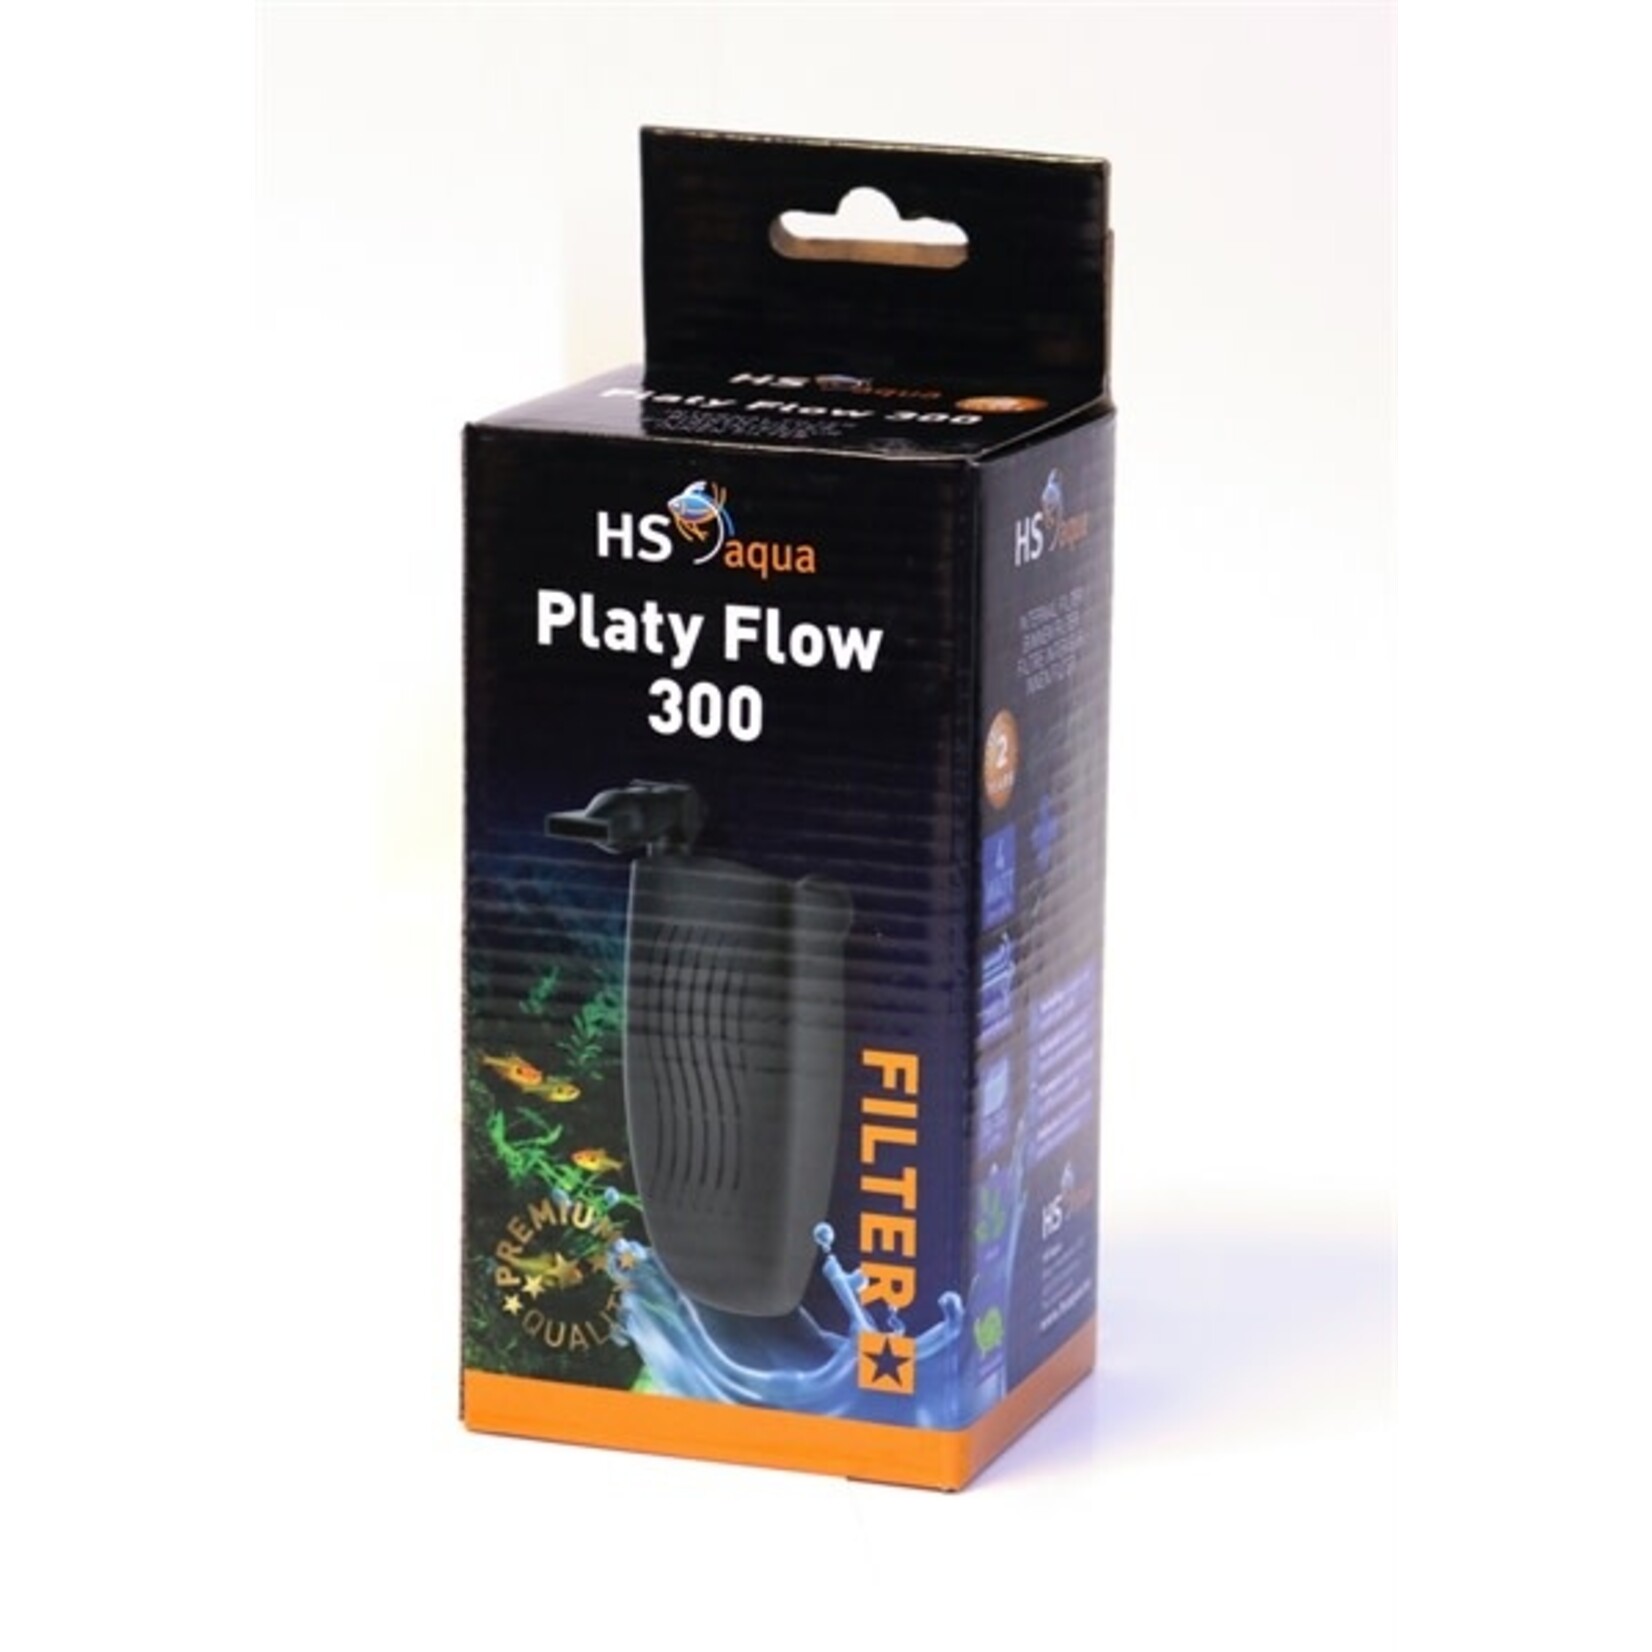 HS Aqua Platy flow 300 binnen filter